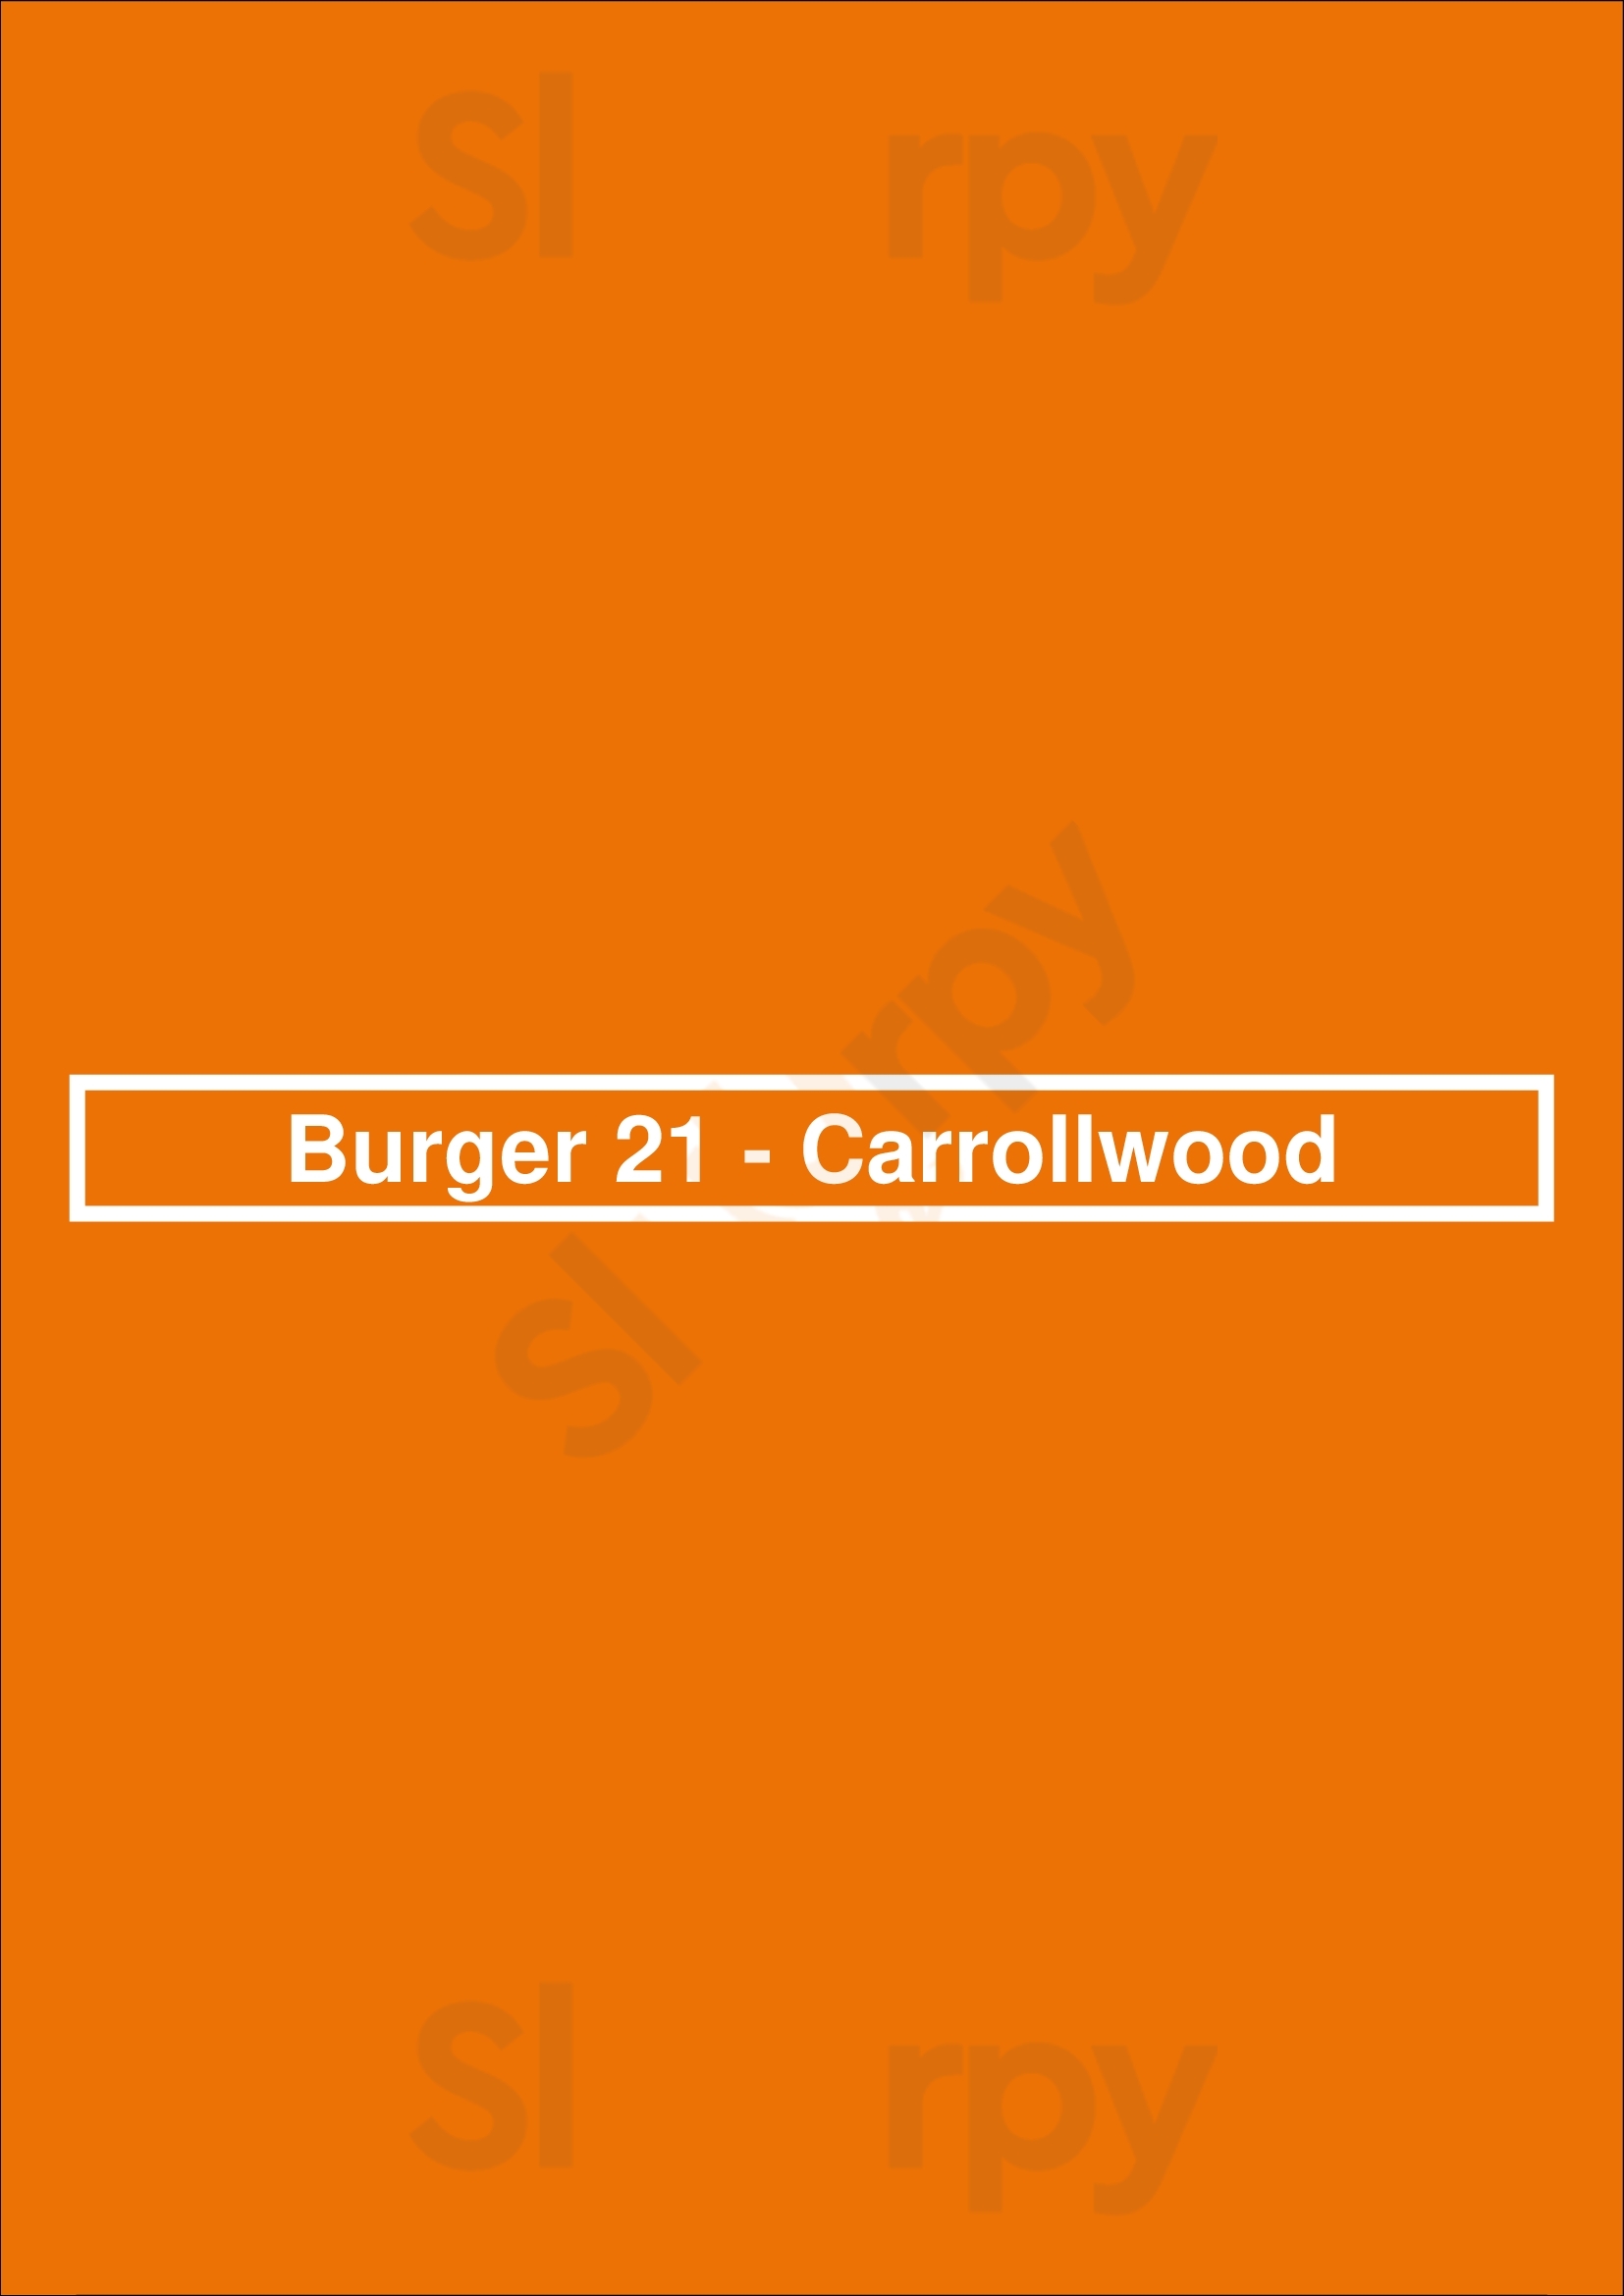 Burger 21 - Carrollwood Tampa Menu - 1